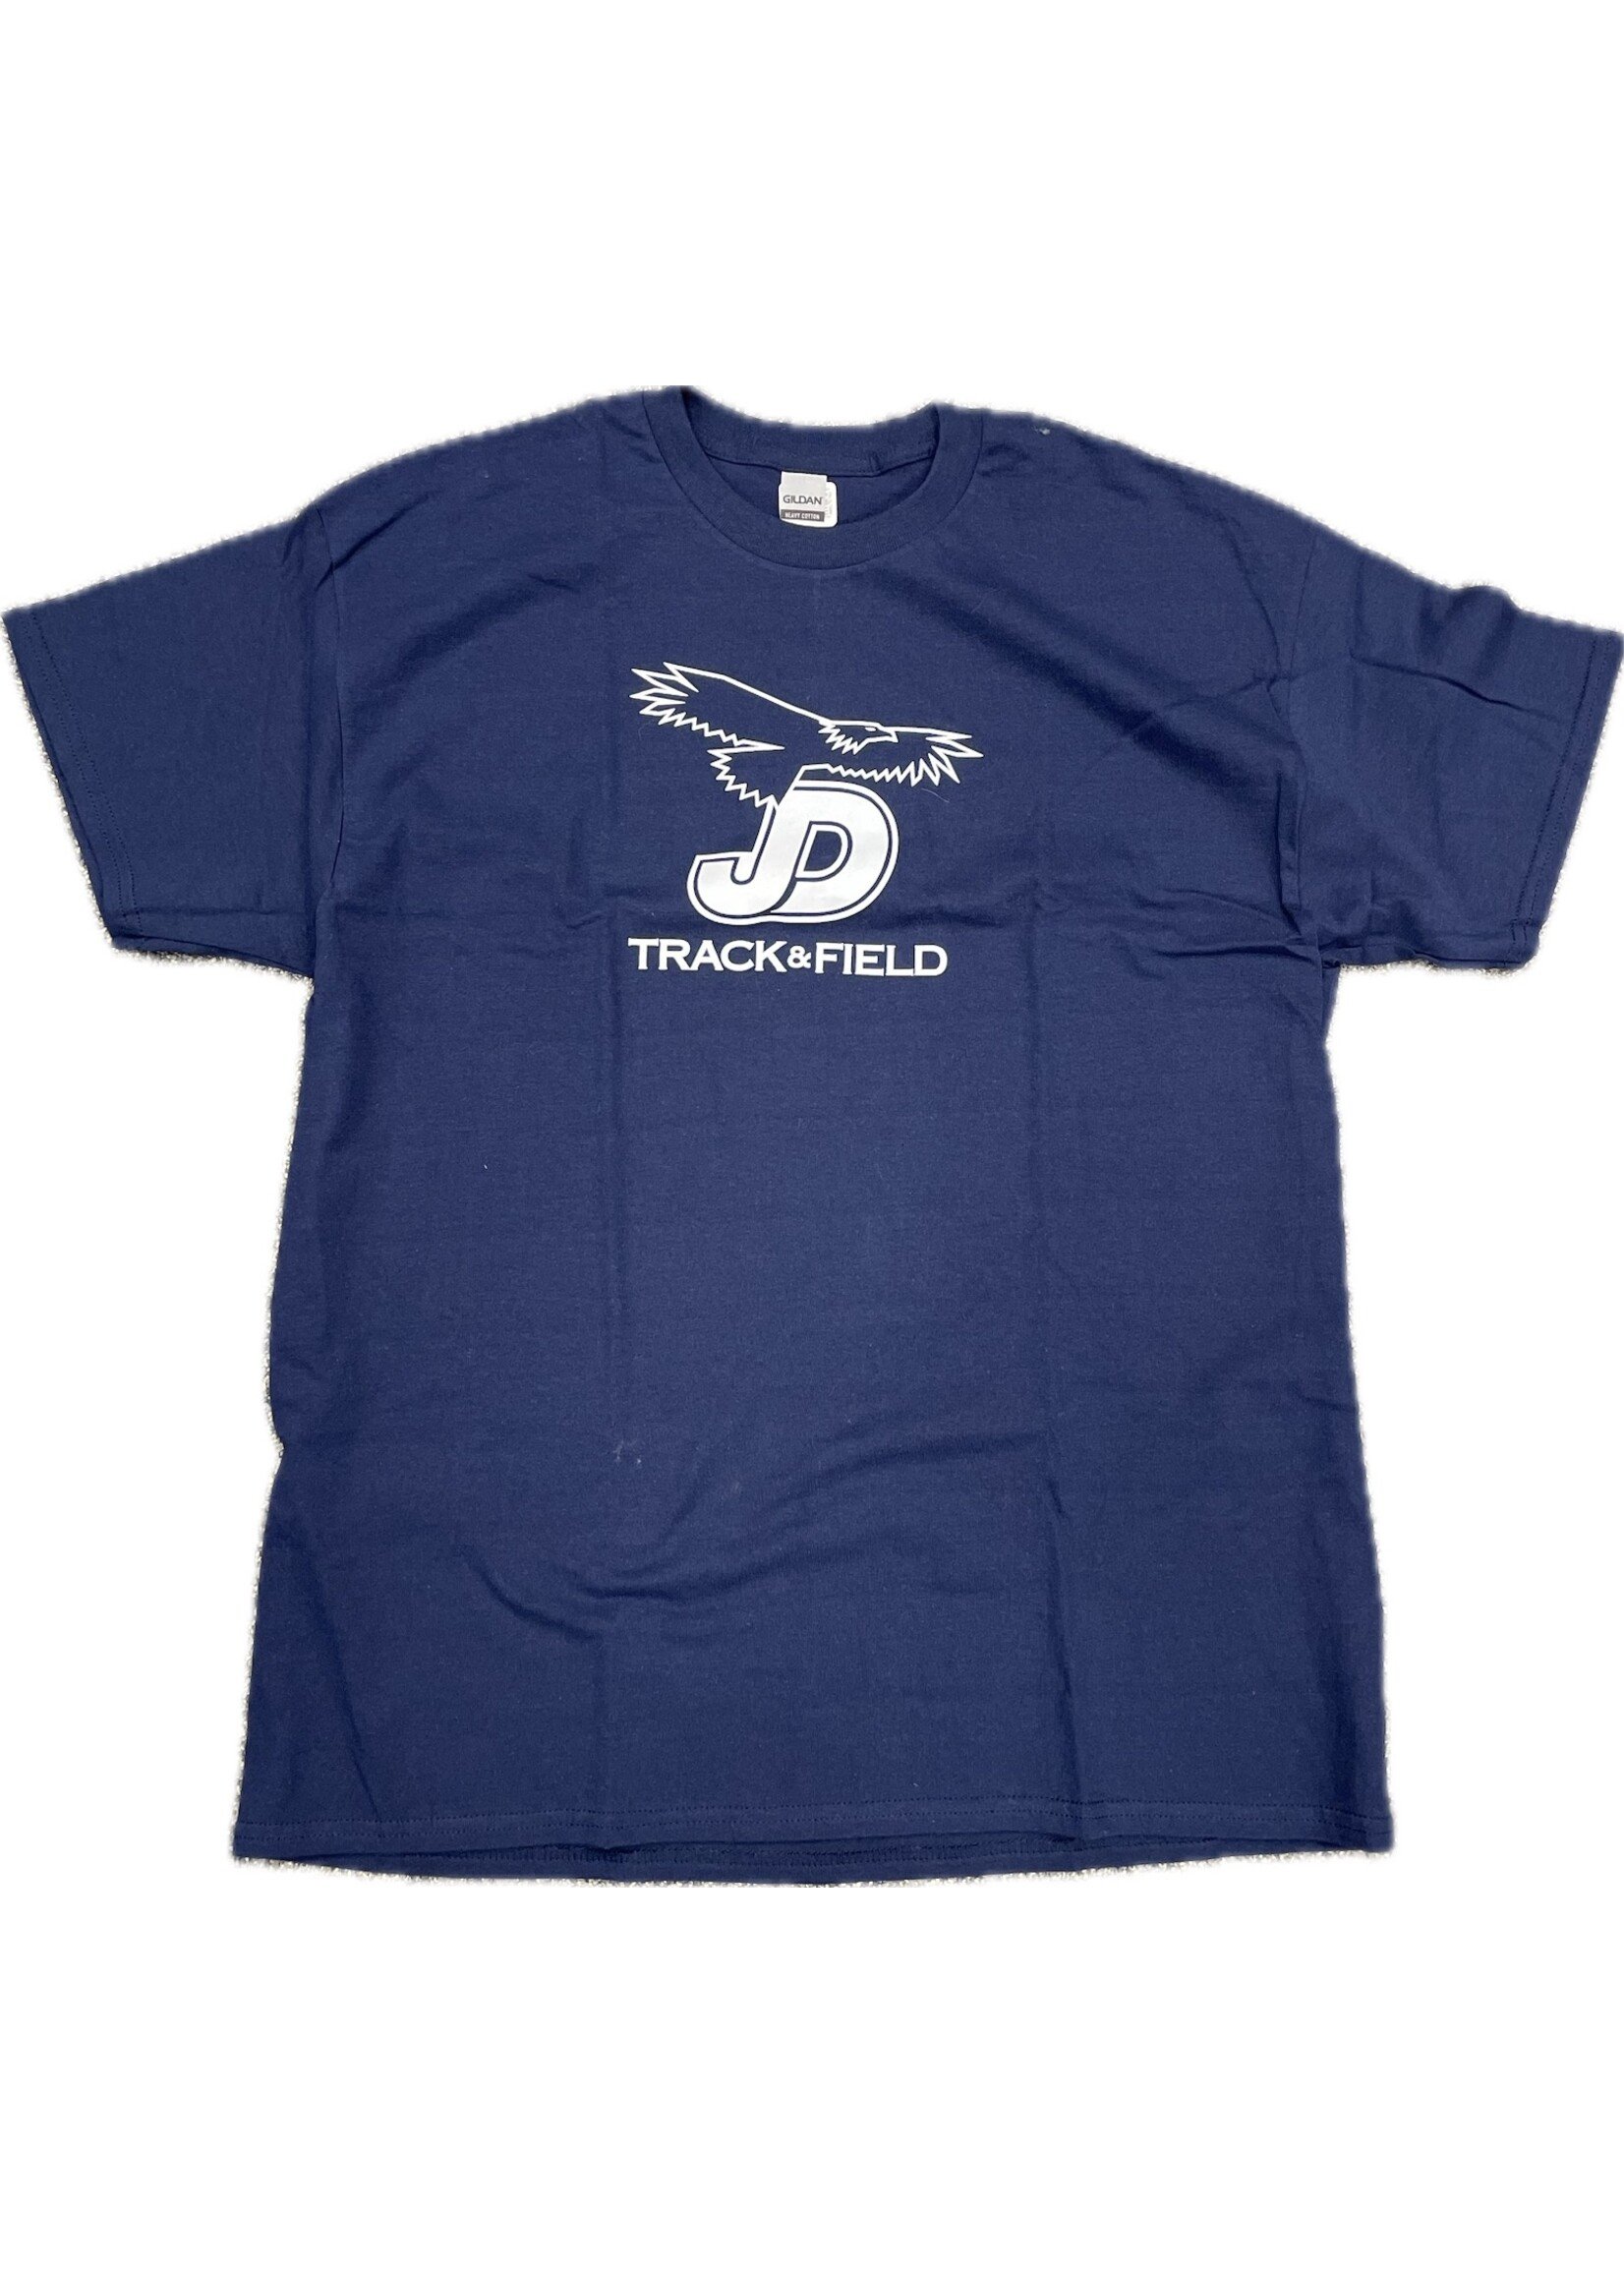 NON-UNIFORM Juan Diego Track & Field  Unisex S/S Shirt